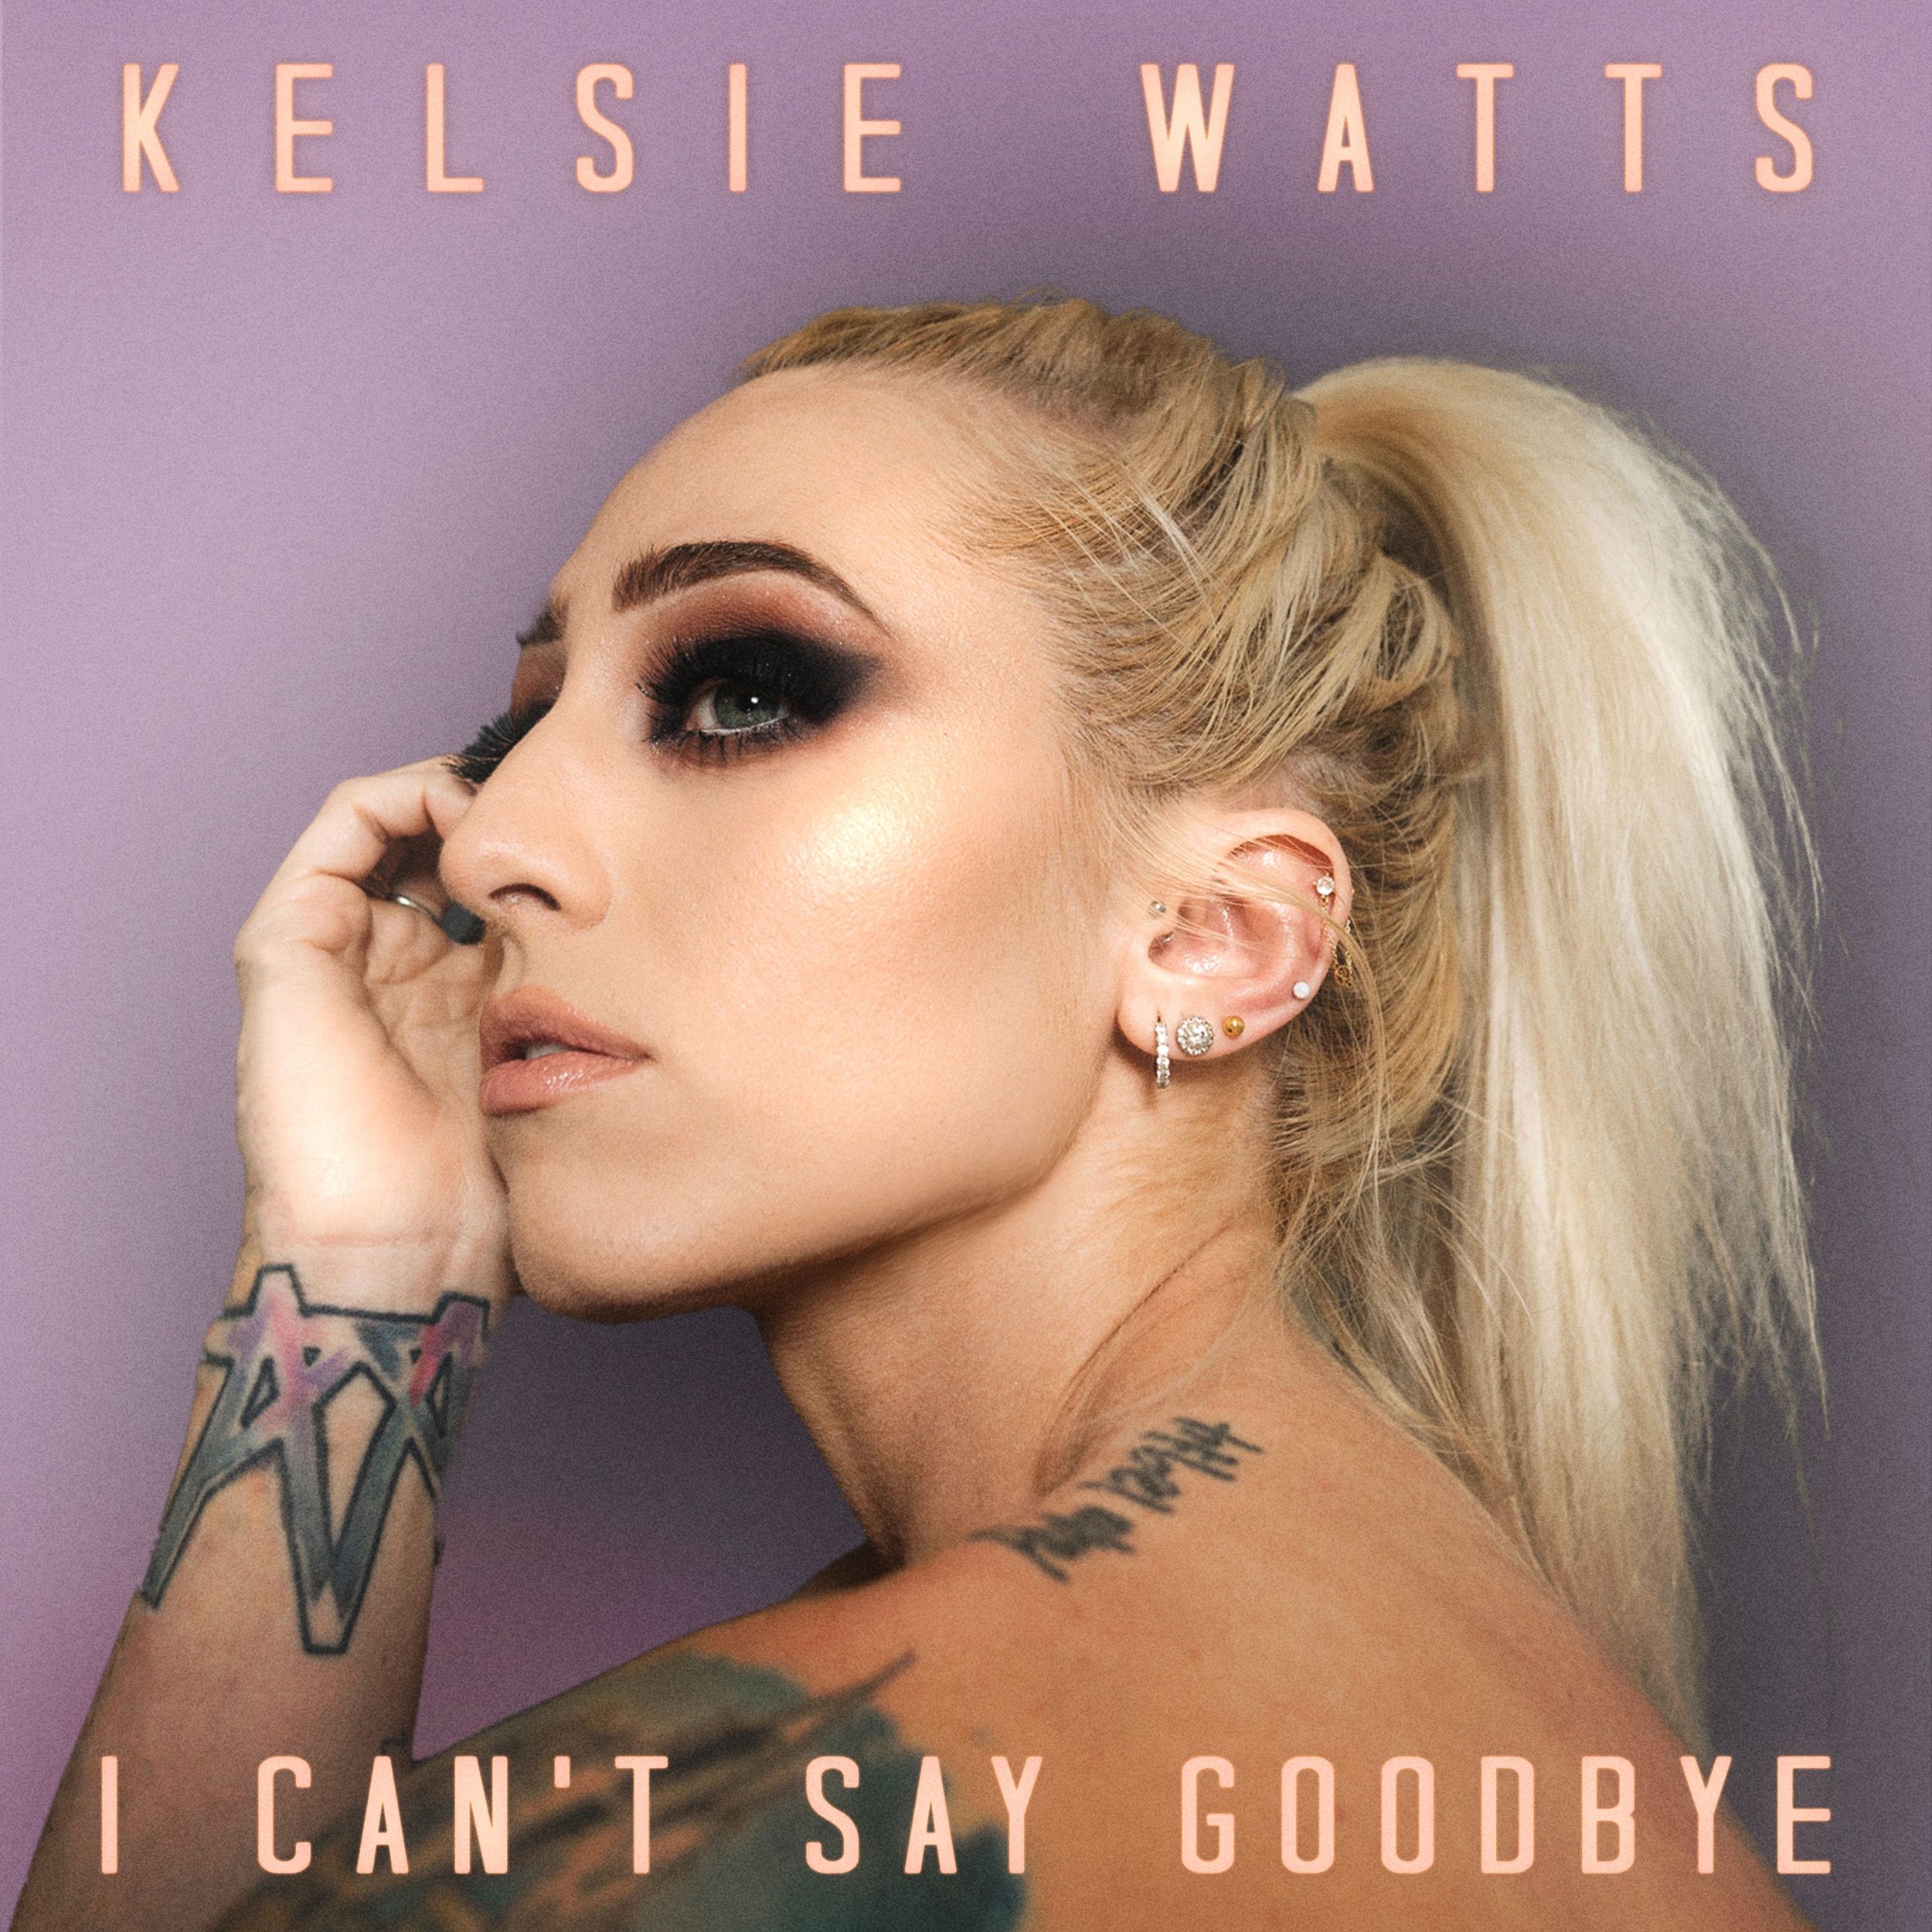 Keisie Watts 'I Can't Say Goodbye'